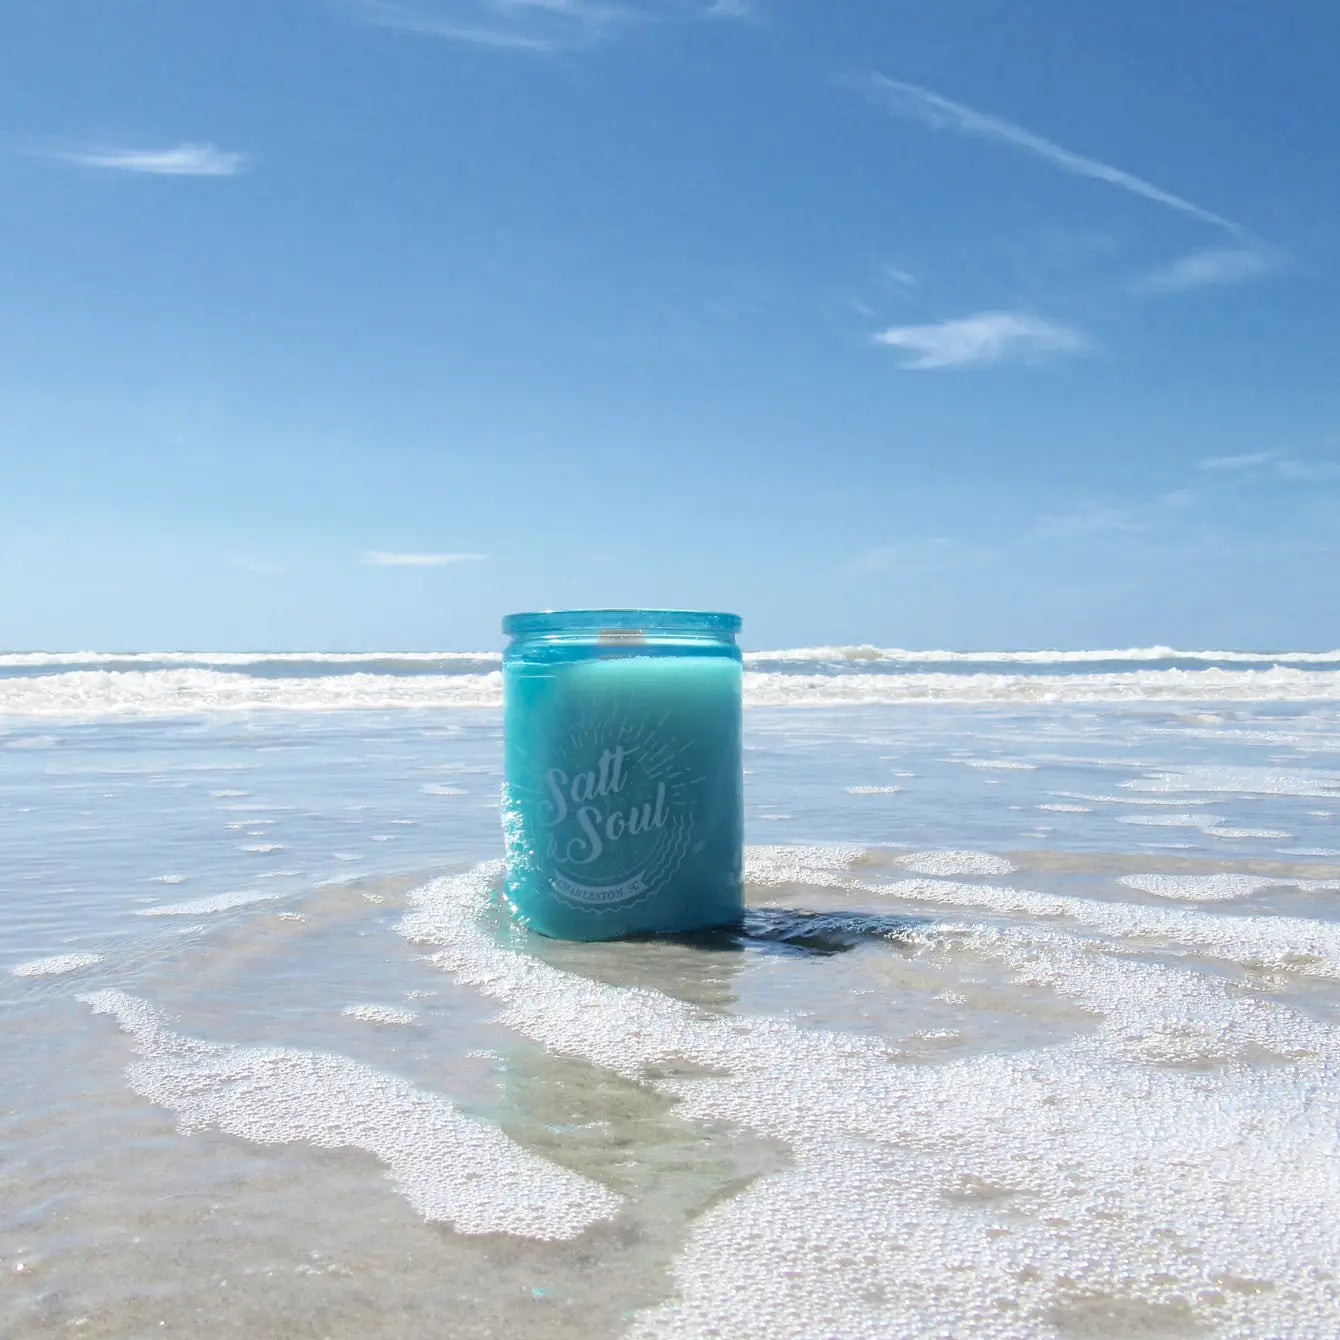 11 oz Salt Air - Salt + Soul Coastal Collection - Pluff Mud Mercantile